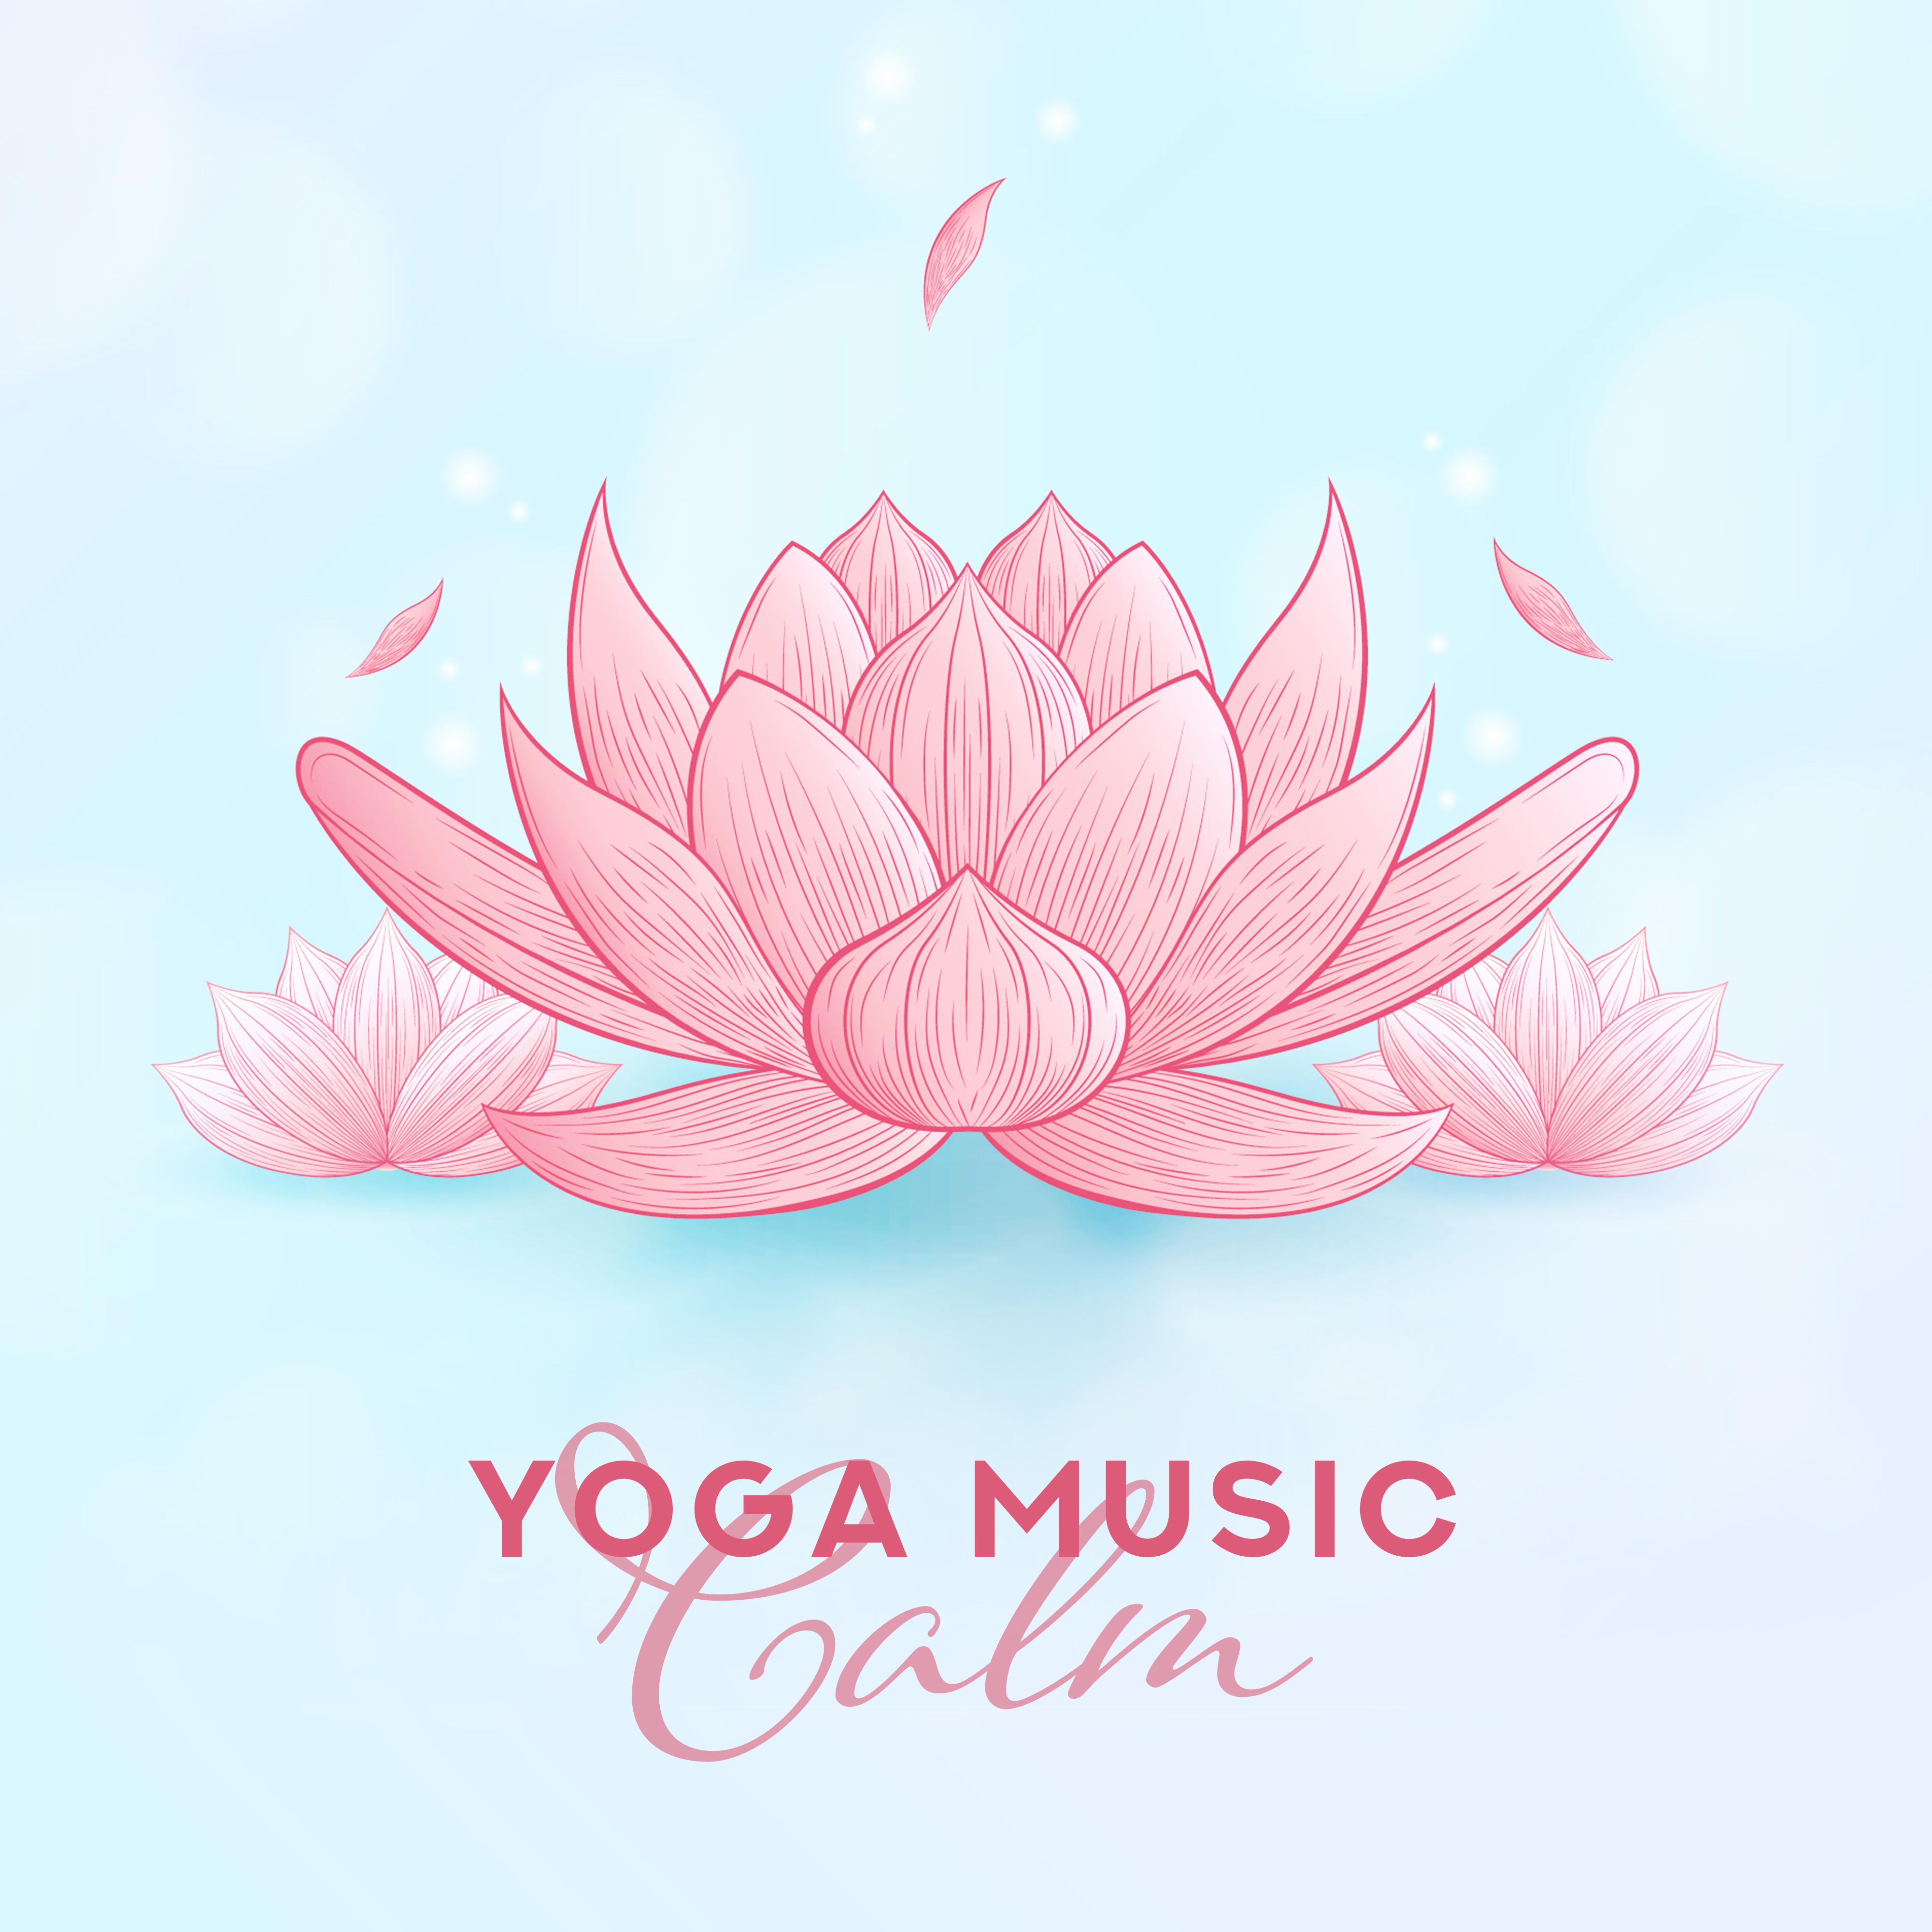 Yoga Music Calm  Meditation Music for Relaxation, Inner Harmony, Yoga Training, Blissfull Mantras, Spiritual Awakening, Deep Meditation, Reduce Stress